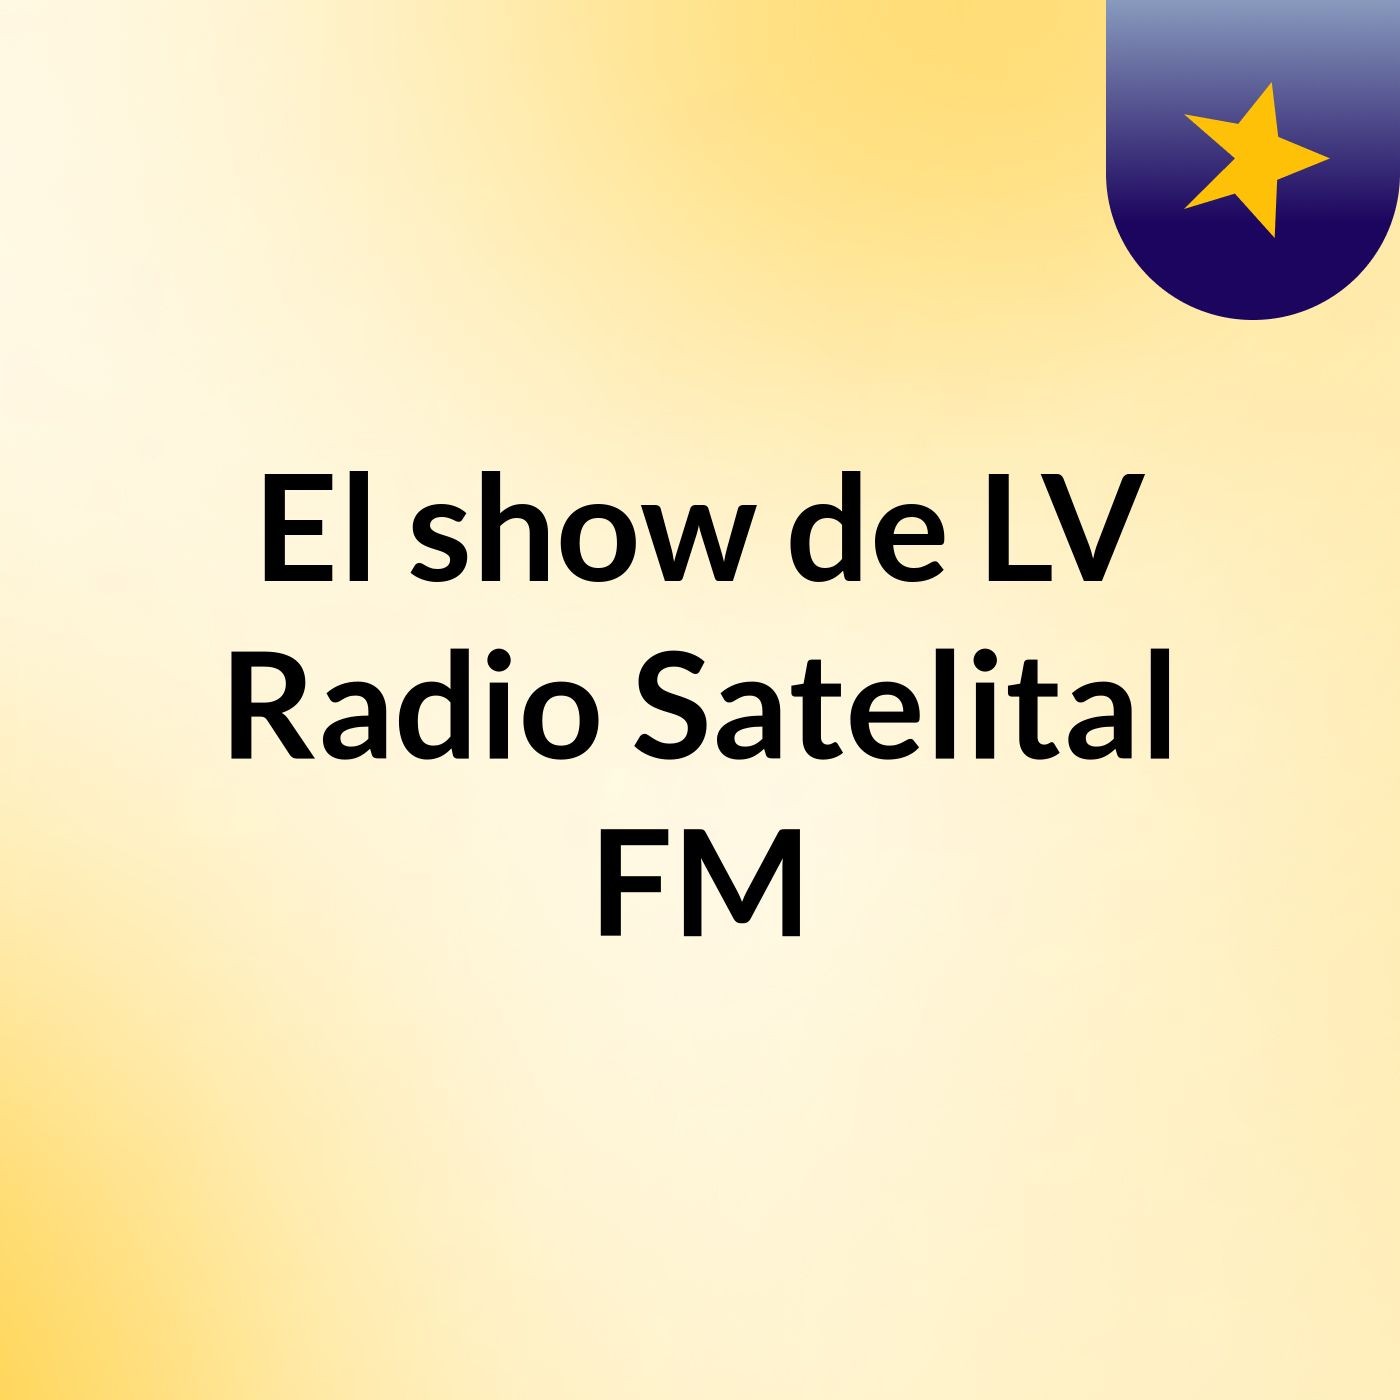 El show de LV Radio Satelital FM